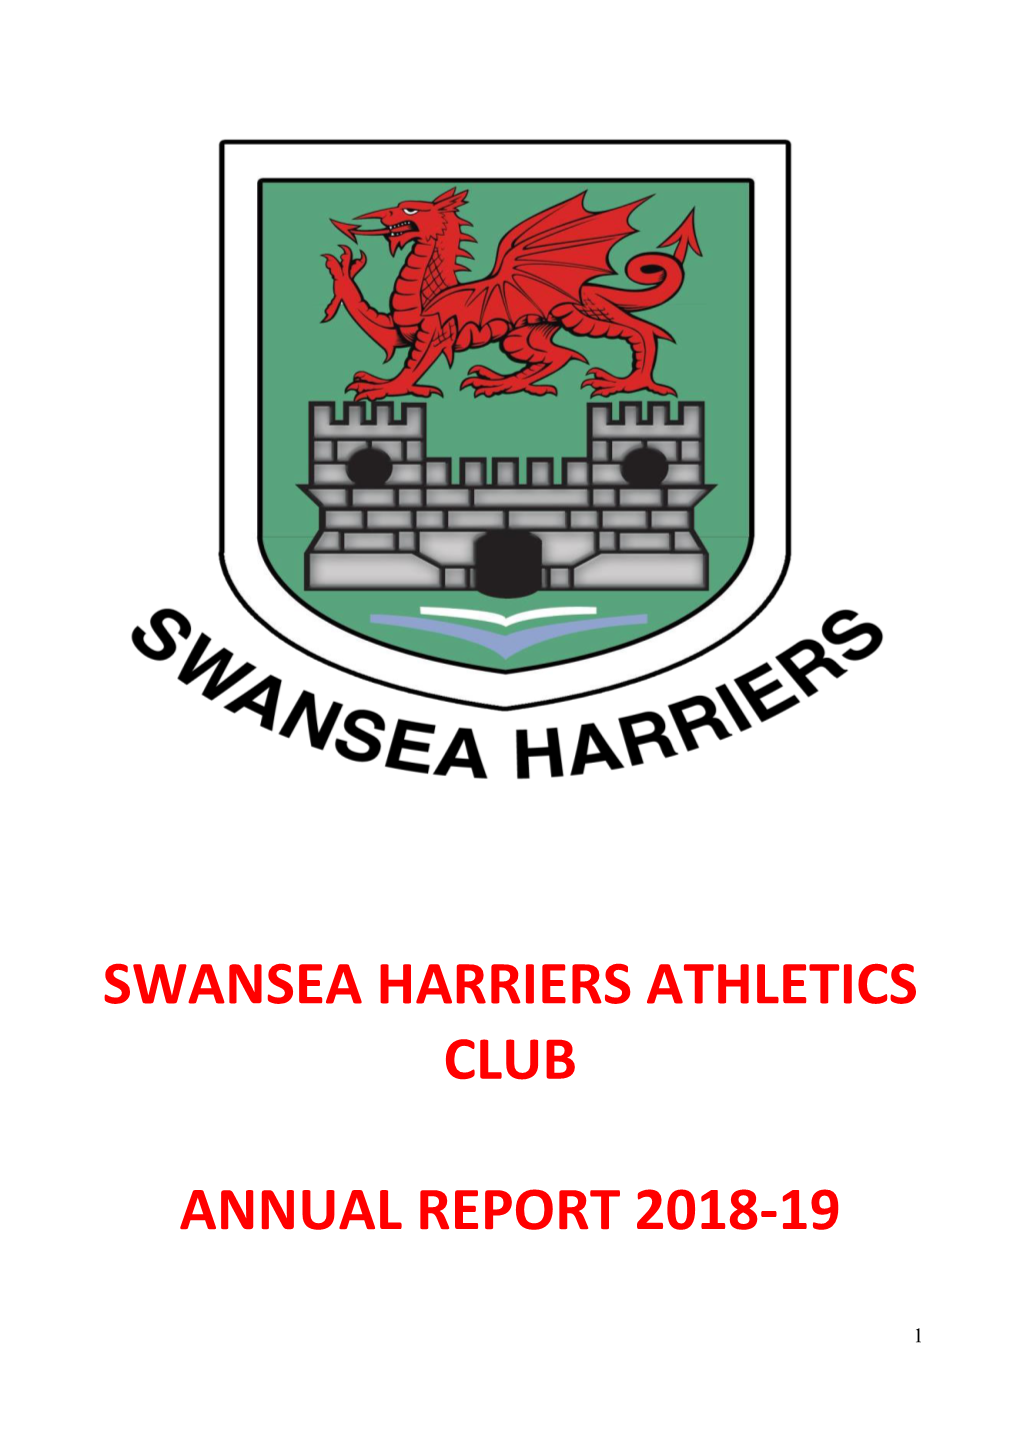 Swansea Harriers Athletics Club Annual Report 2018-19